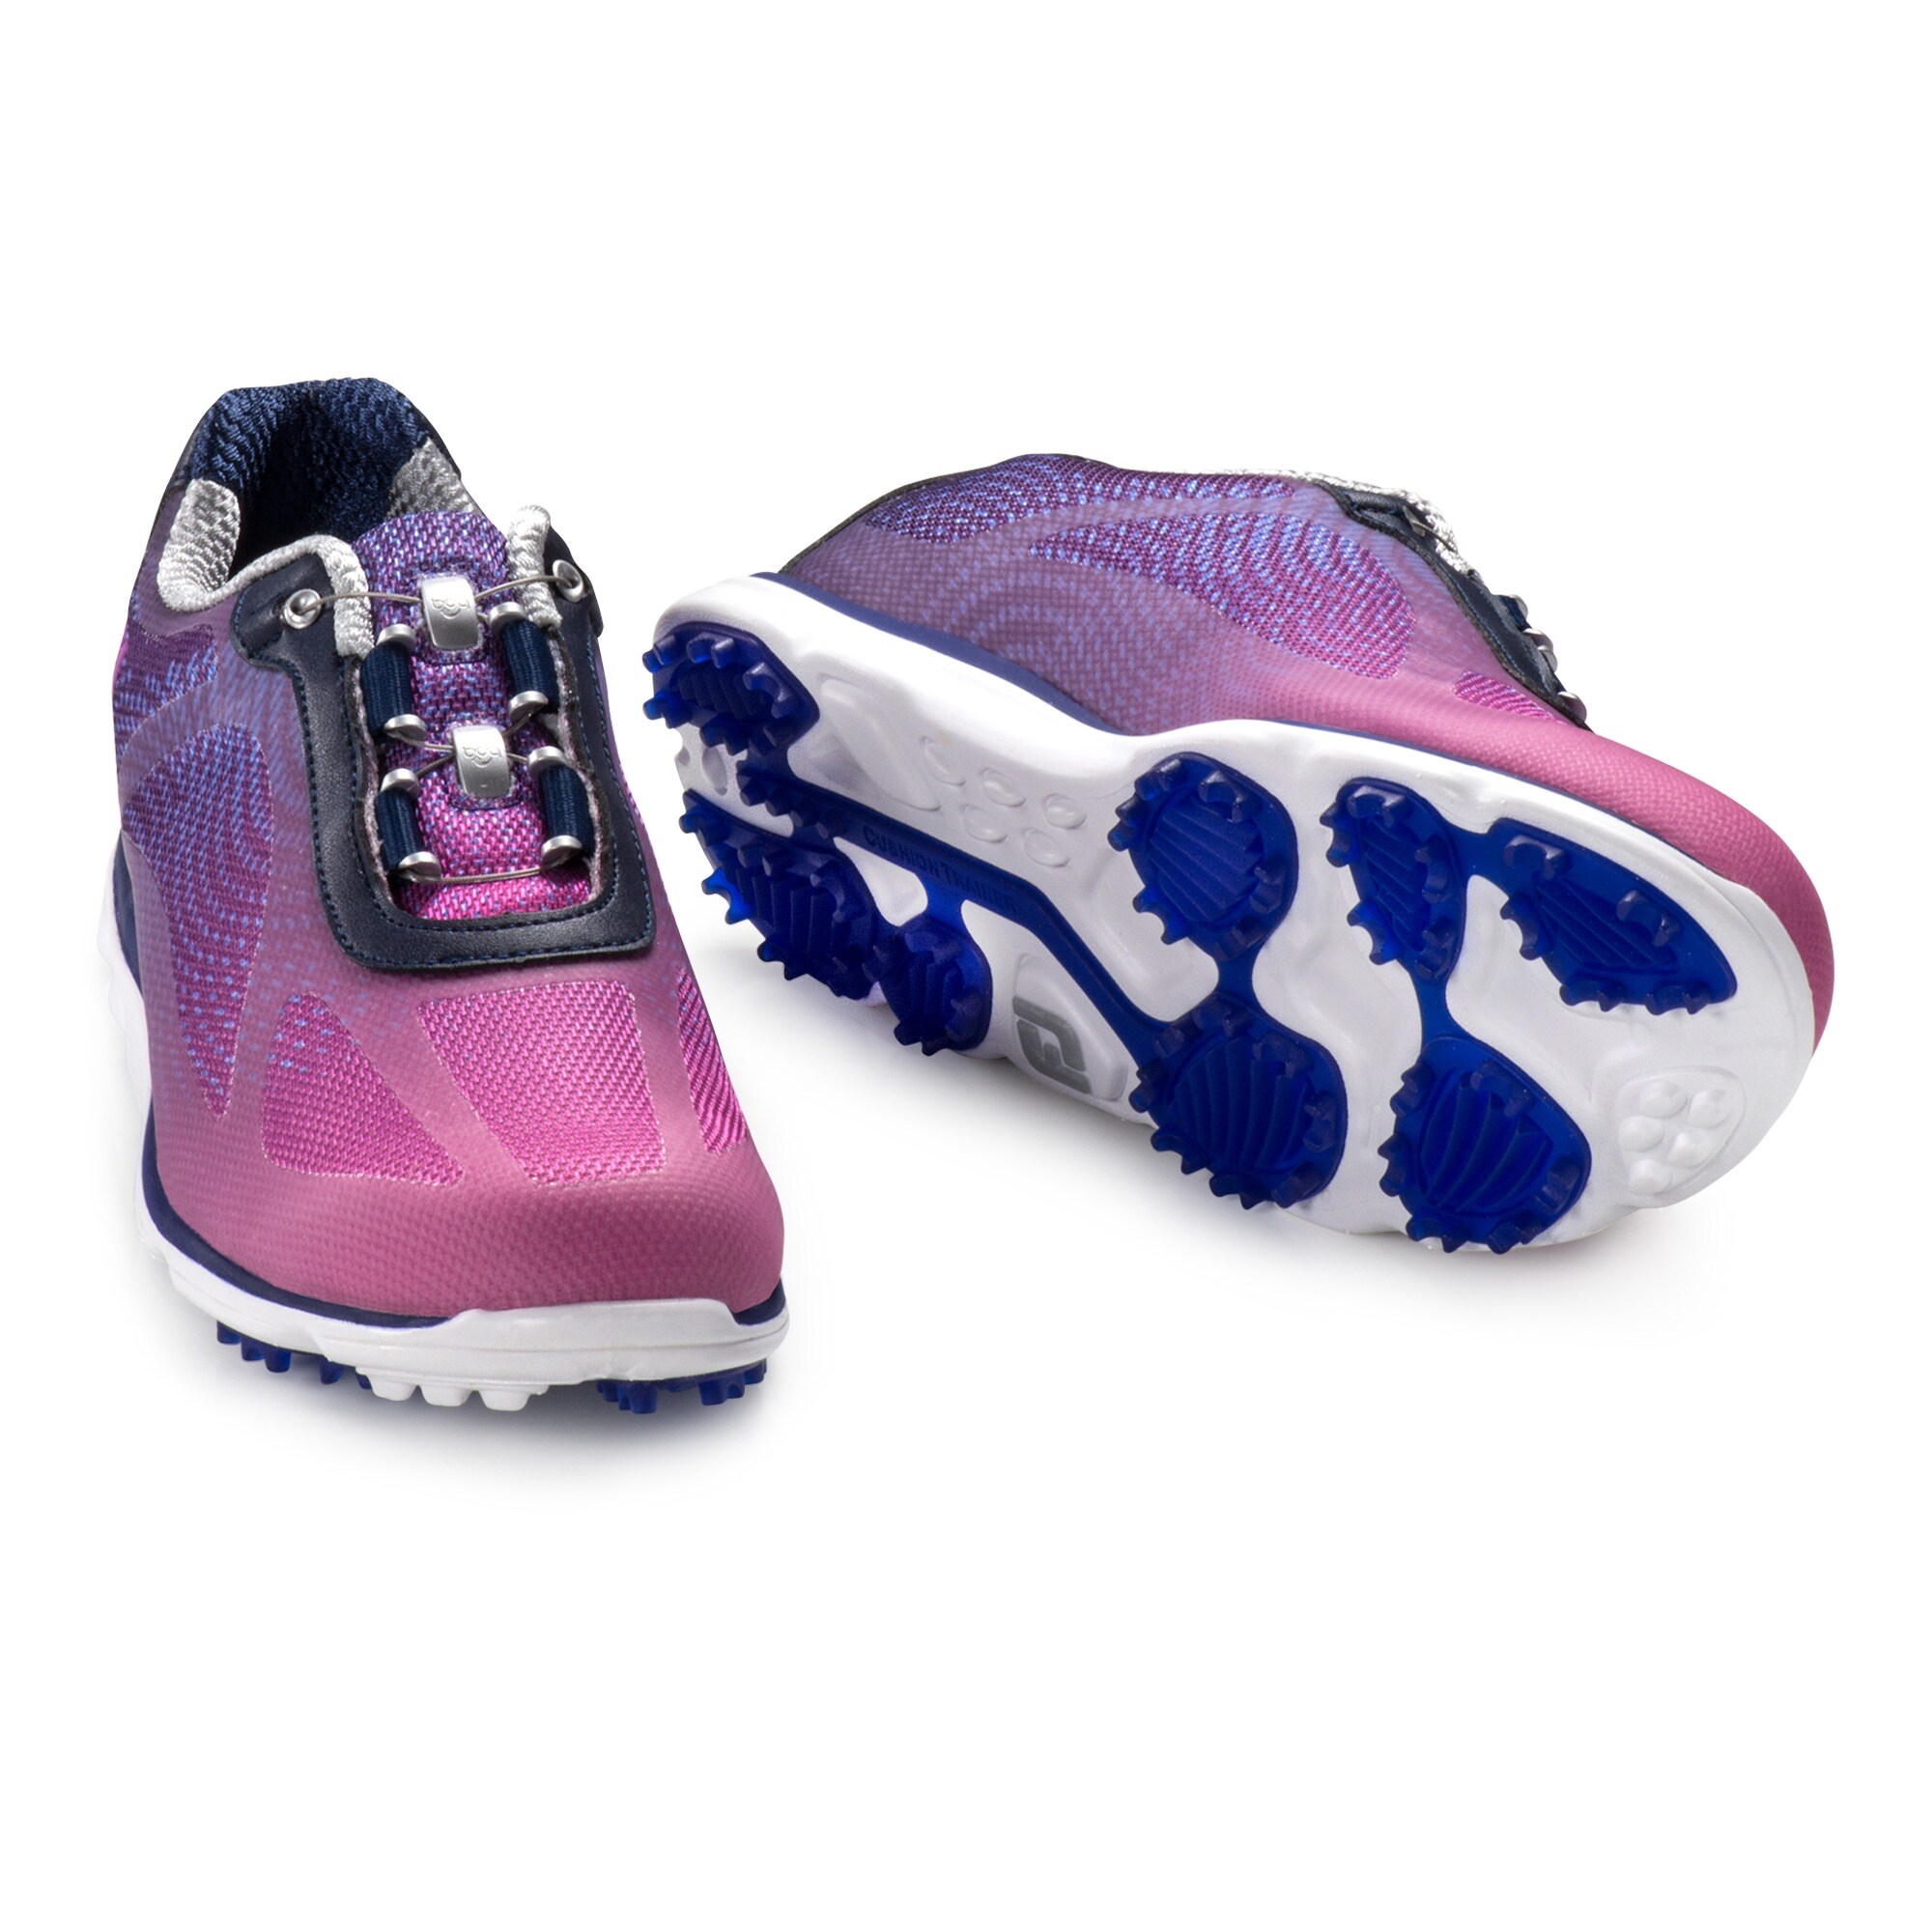 footjoy empower boa ladies golf shoes